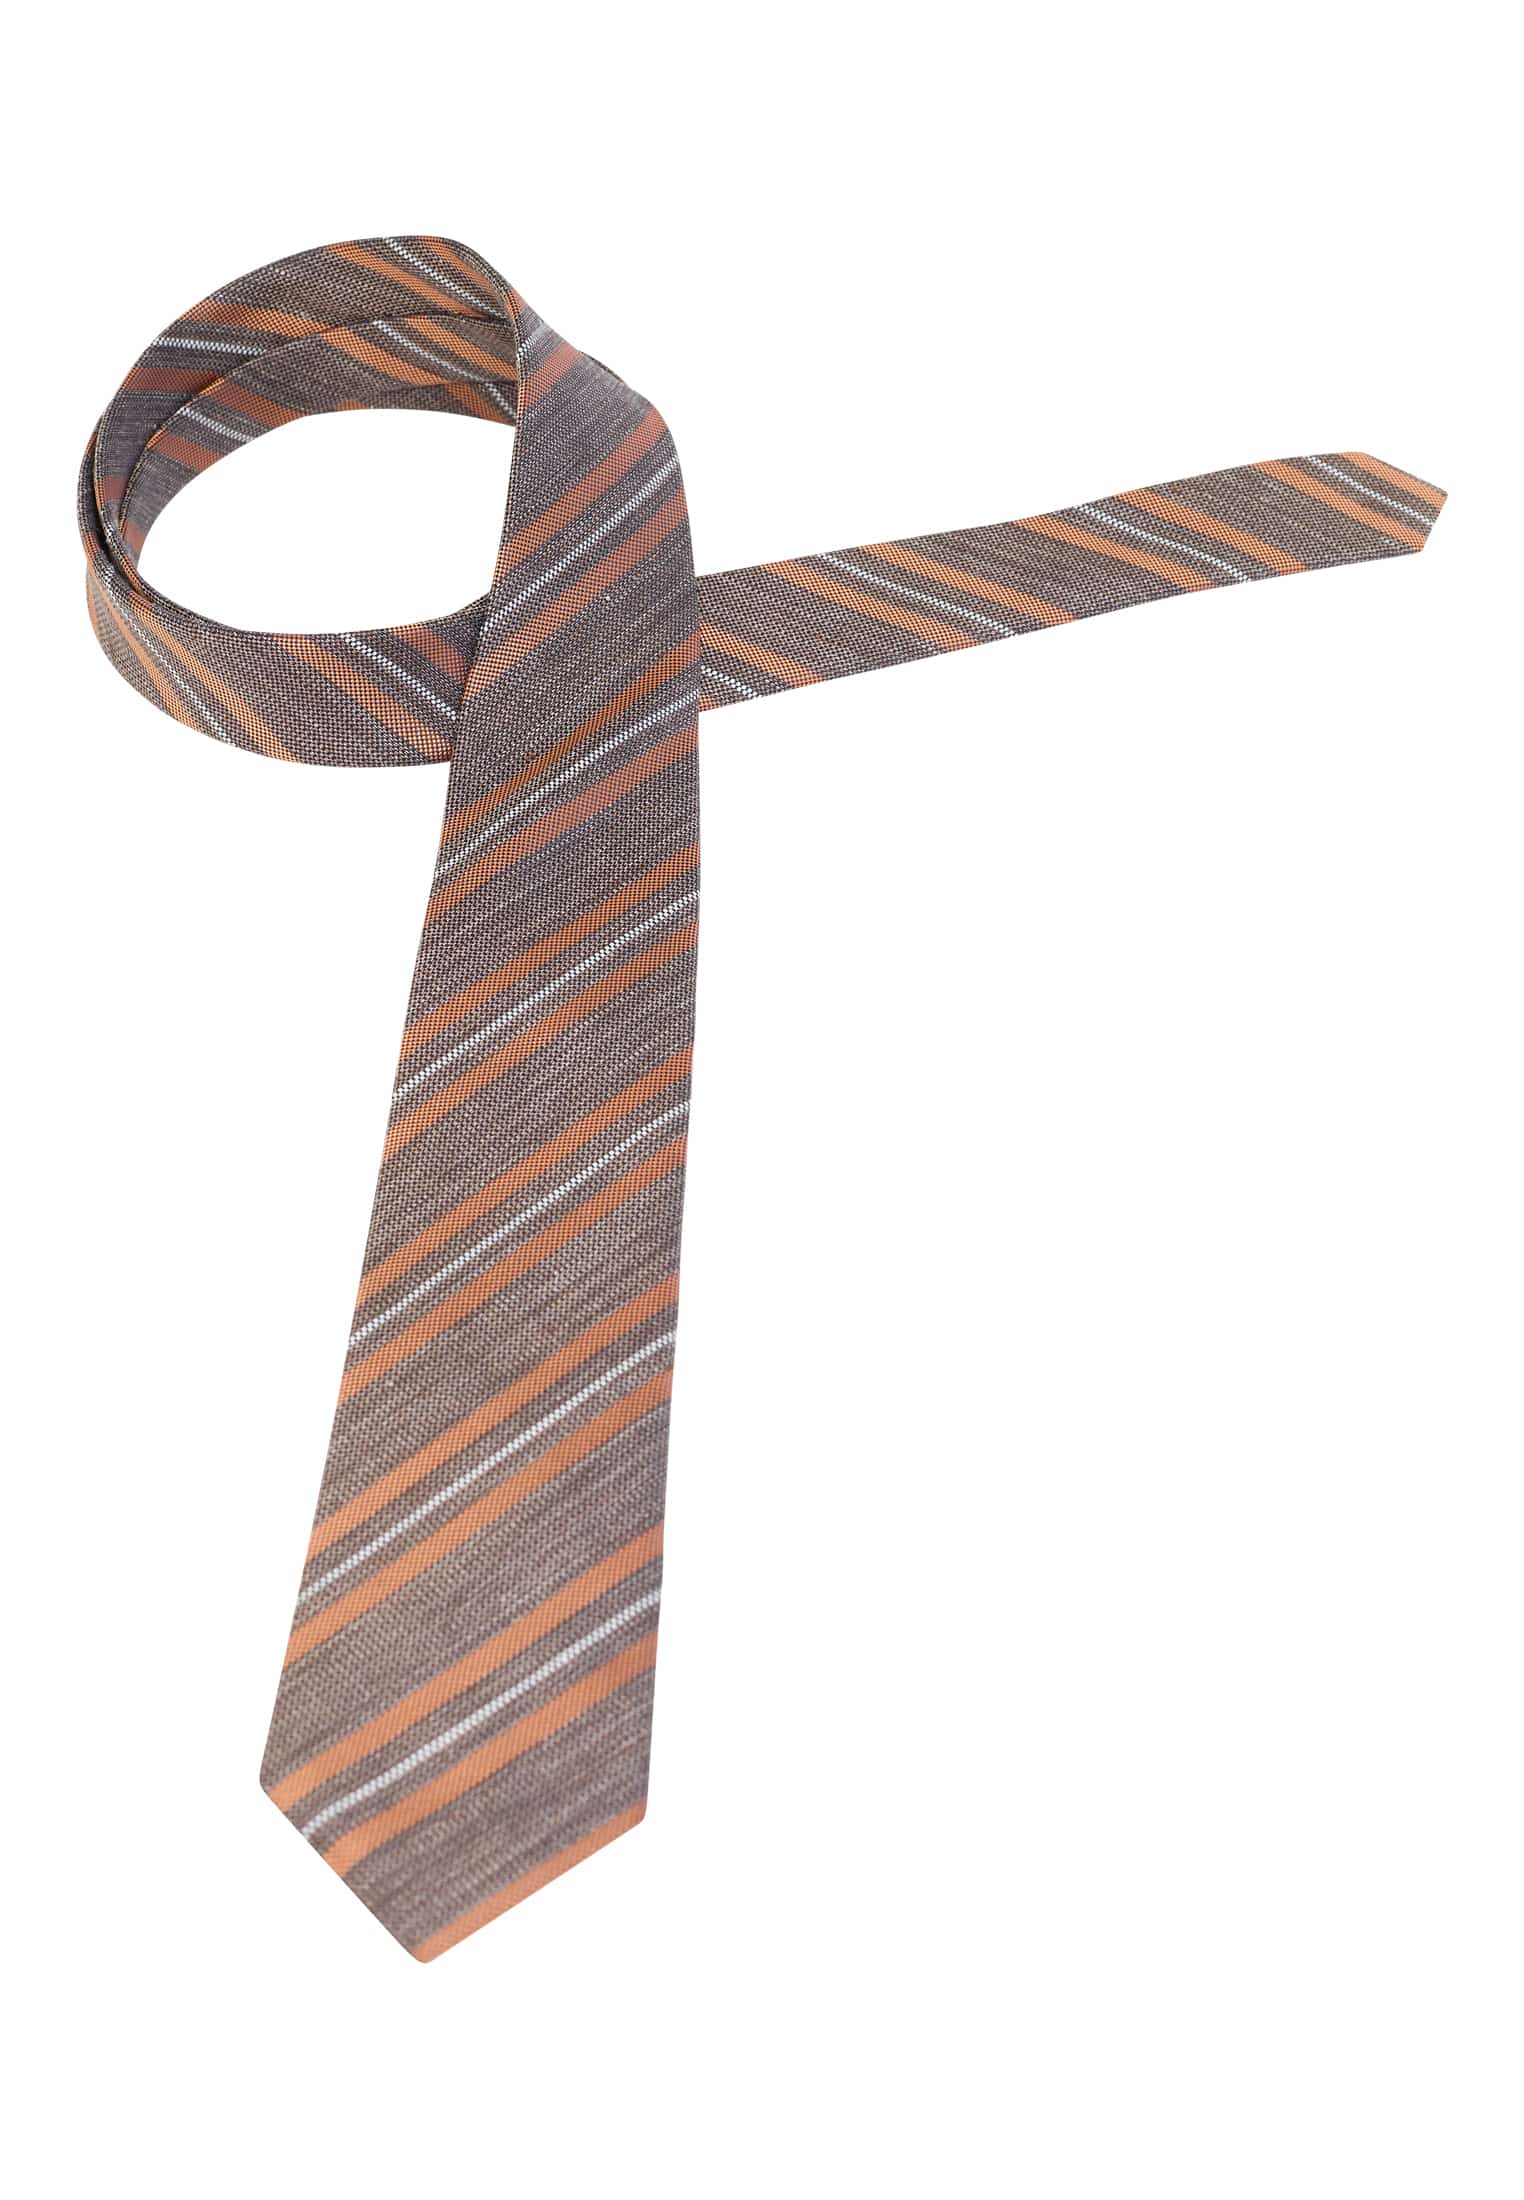 Krawatte in terracotta gemustert | terracotta | 142 | 1AC01978-08-91-142